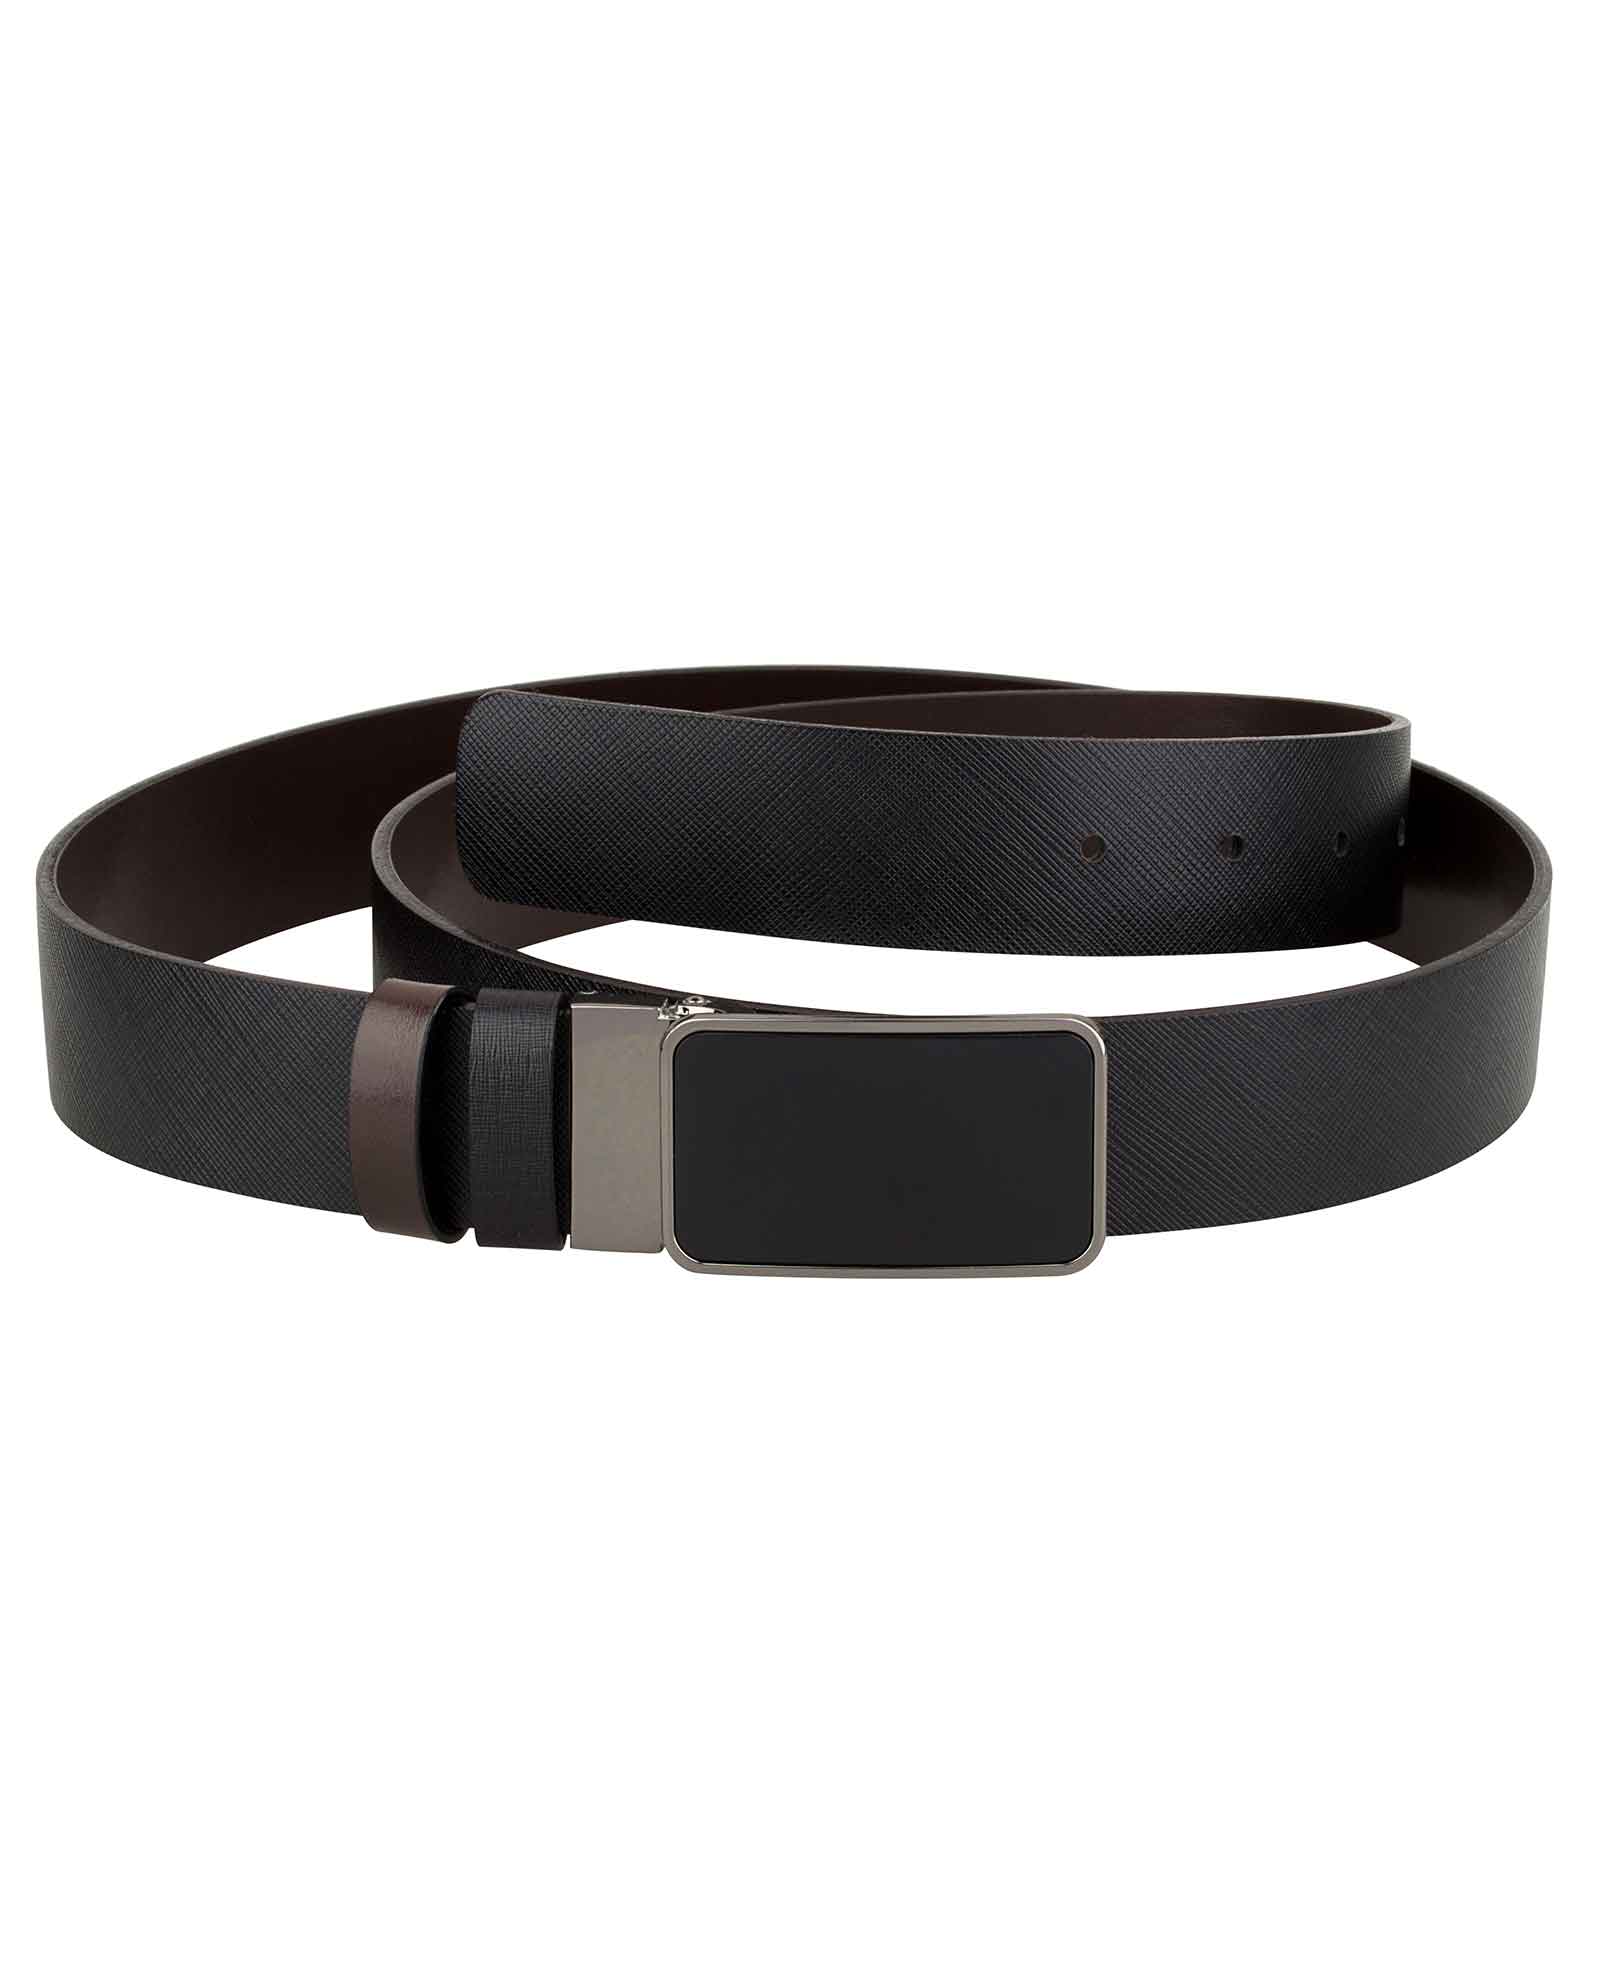 Buy Mens Saffiano Leather Belt - Black Brown Reversible - Capo Pelle